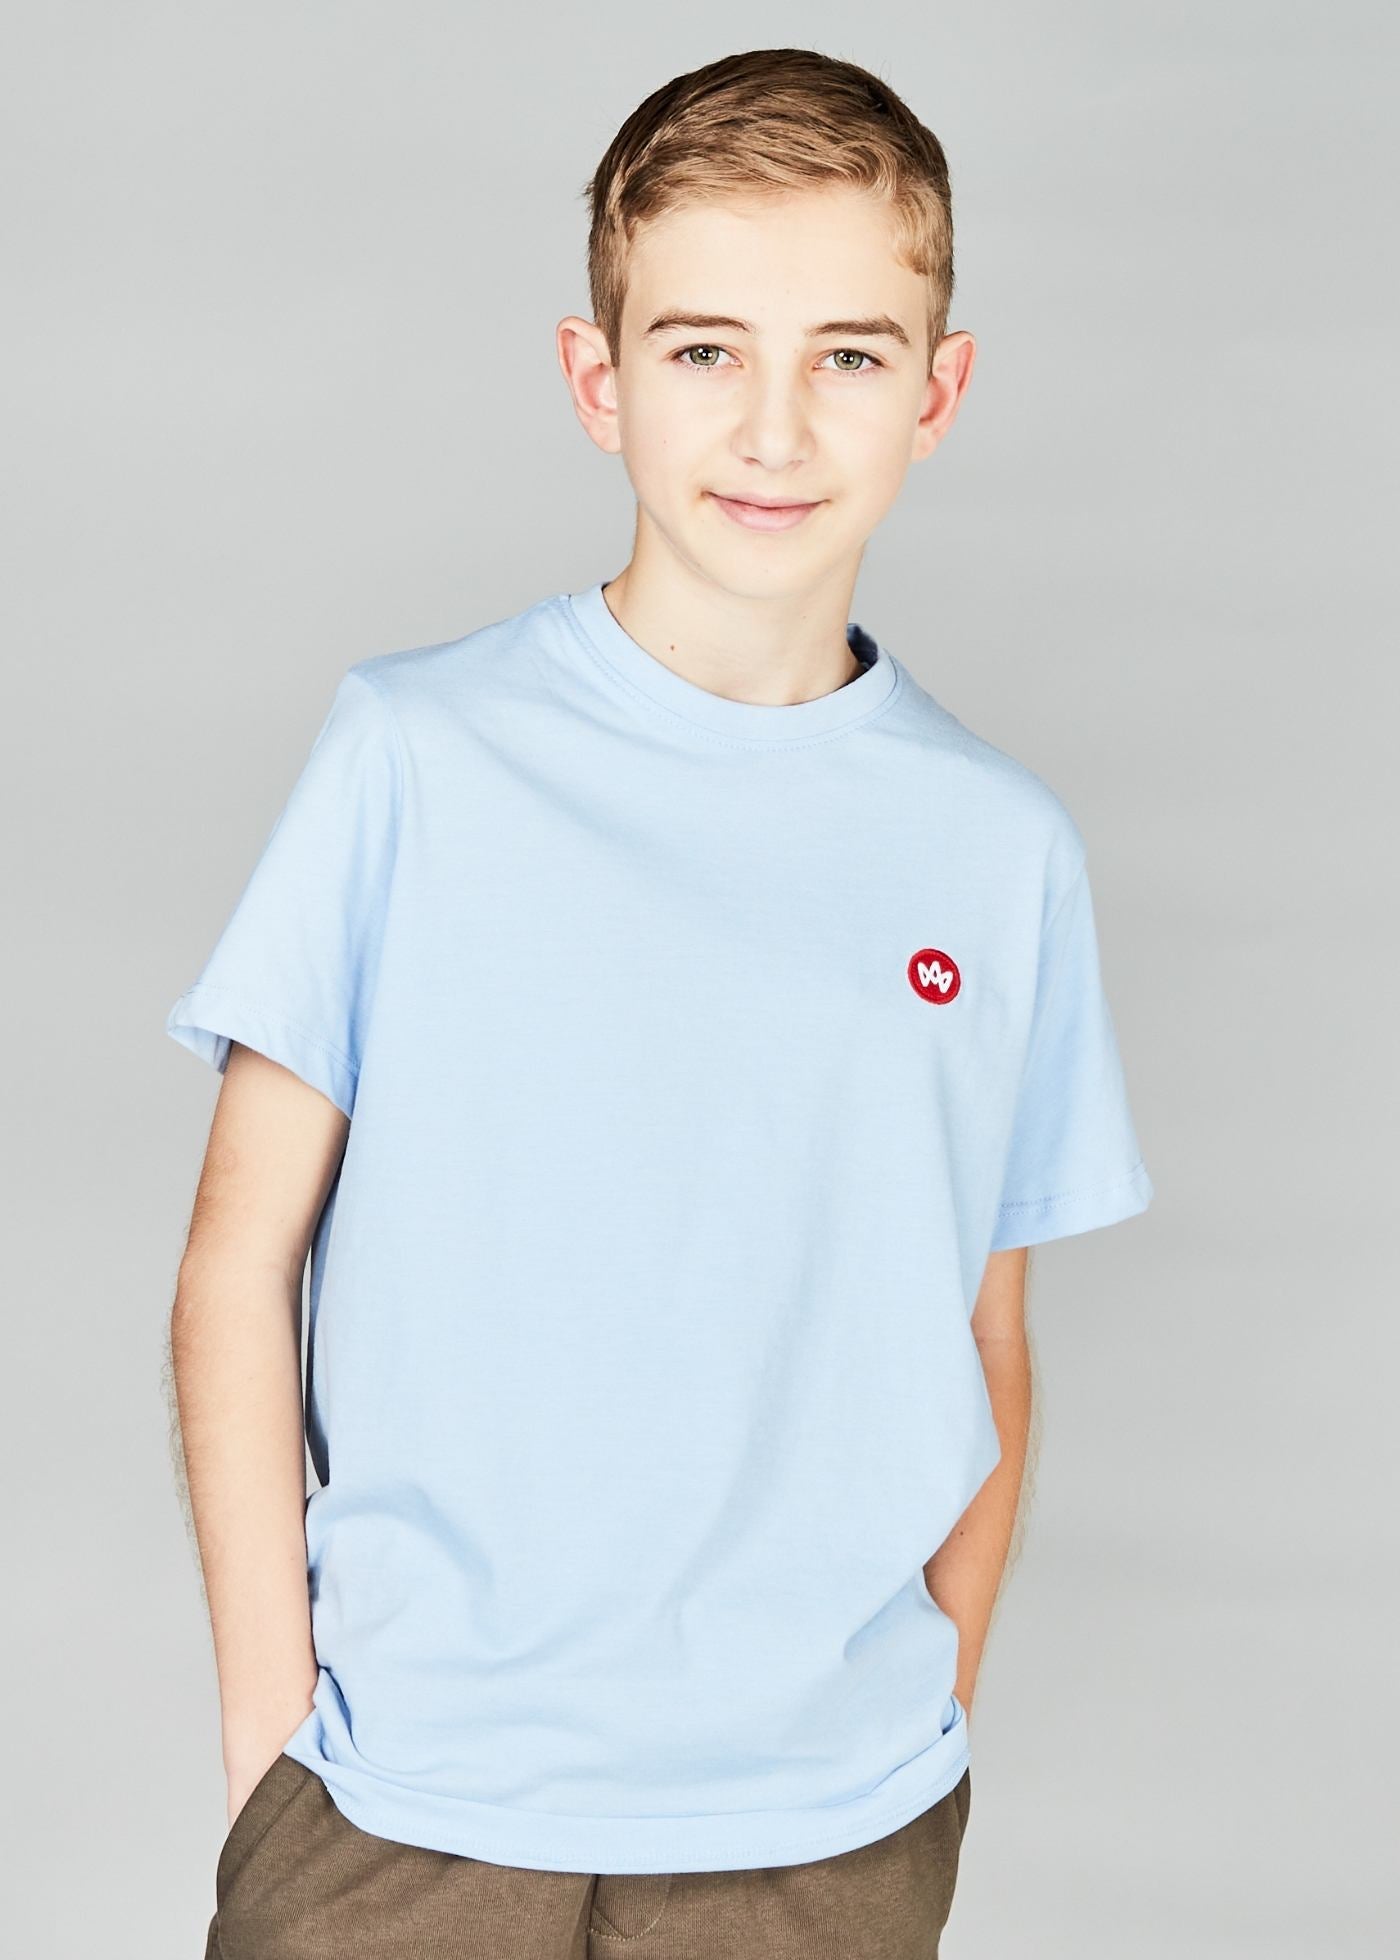 Timmi Kids Organic/Recycled t-shirt blue – Kronstadt